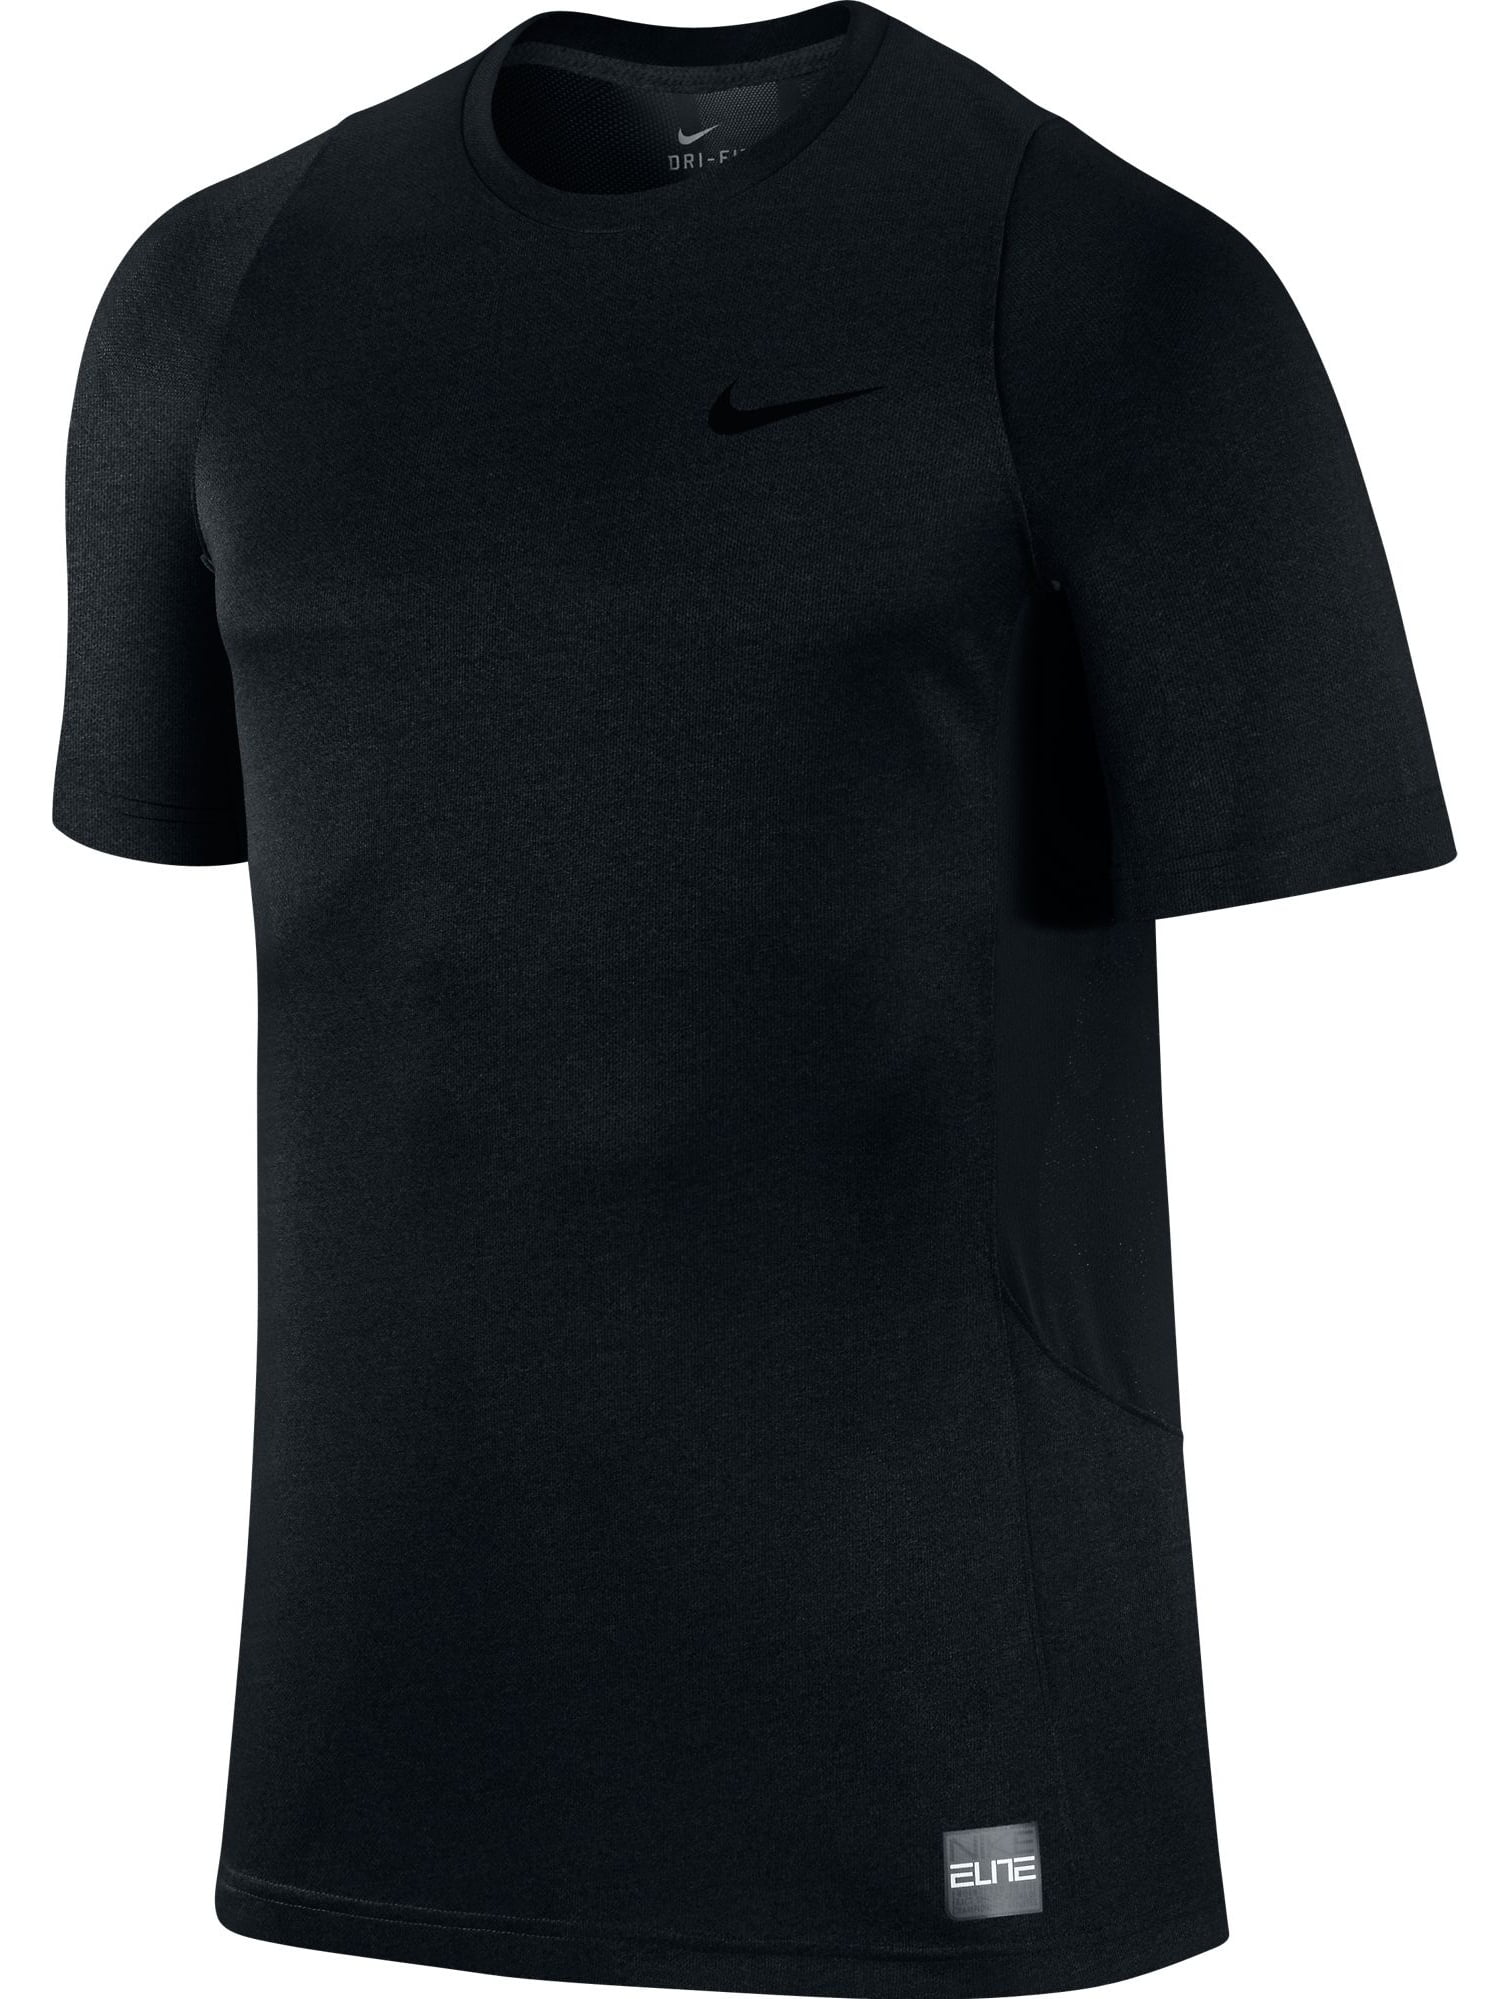 Nike - Nike Elite Shooter 2.0 Men's Basketball T-Shirt Black/Black ...